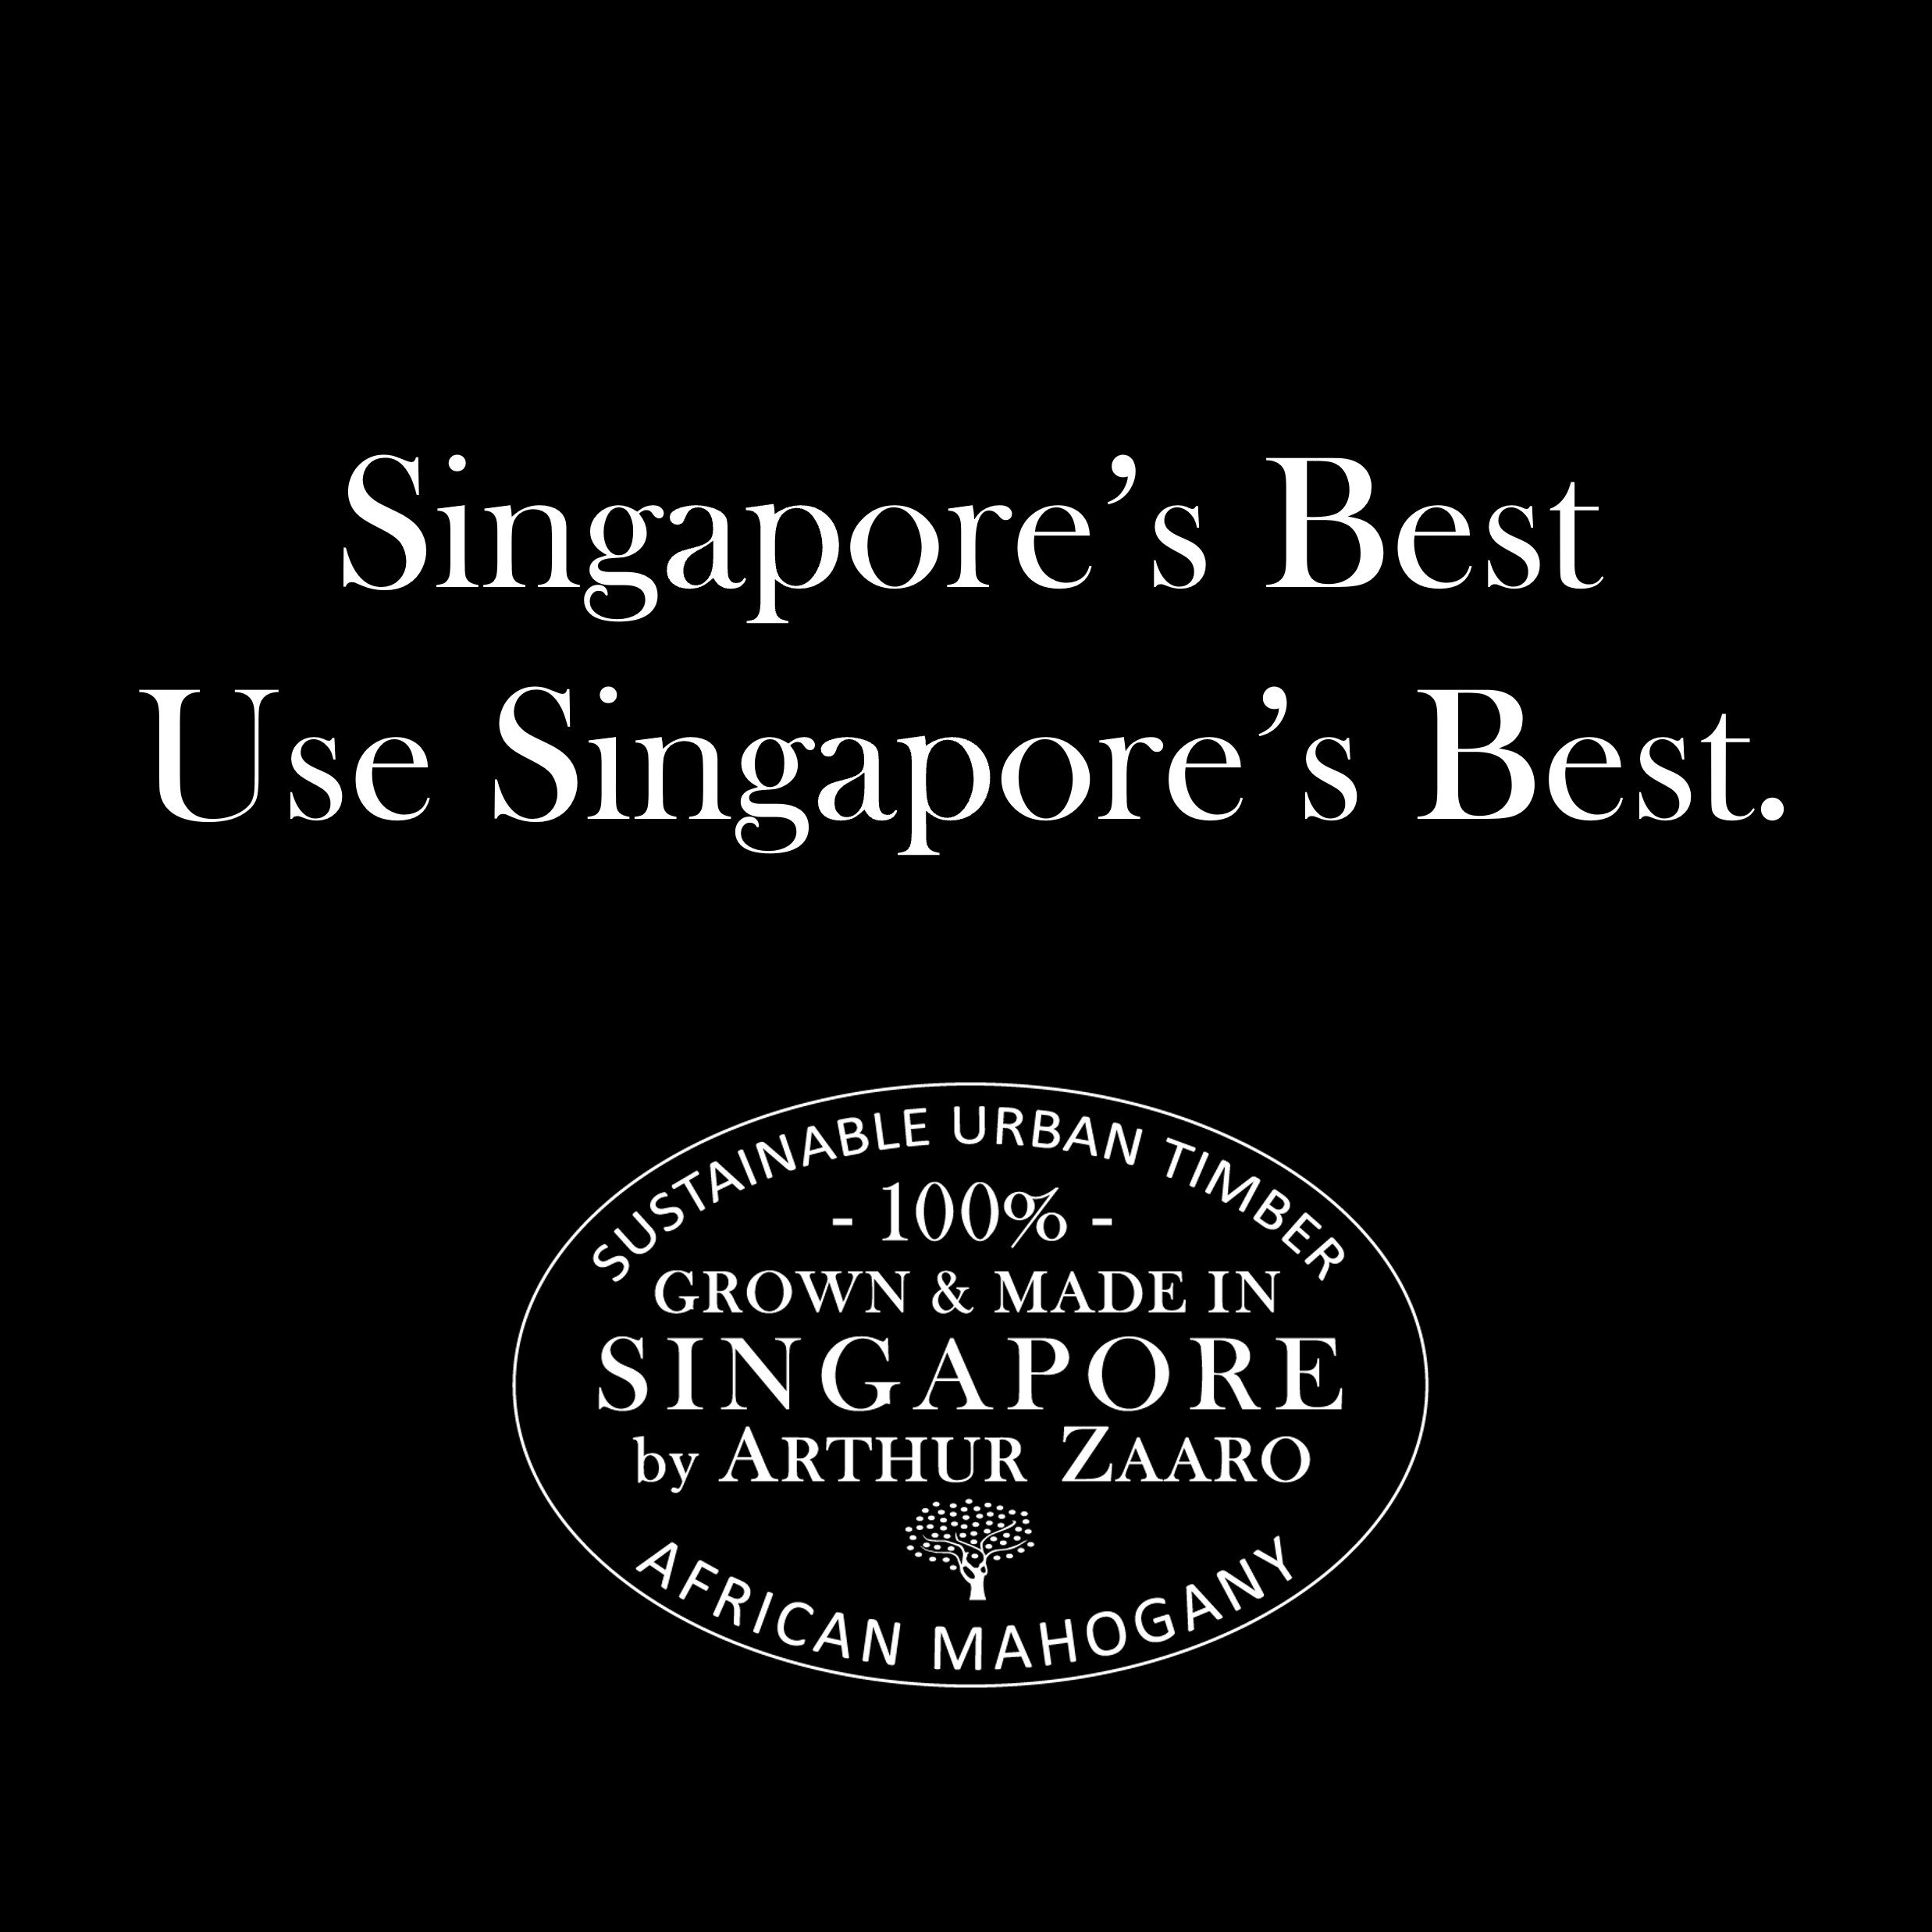 singapores best sq.jpg